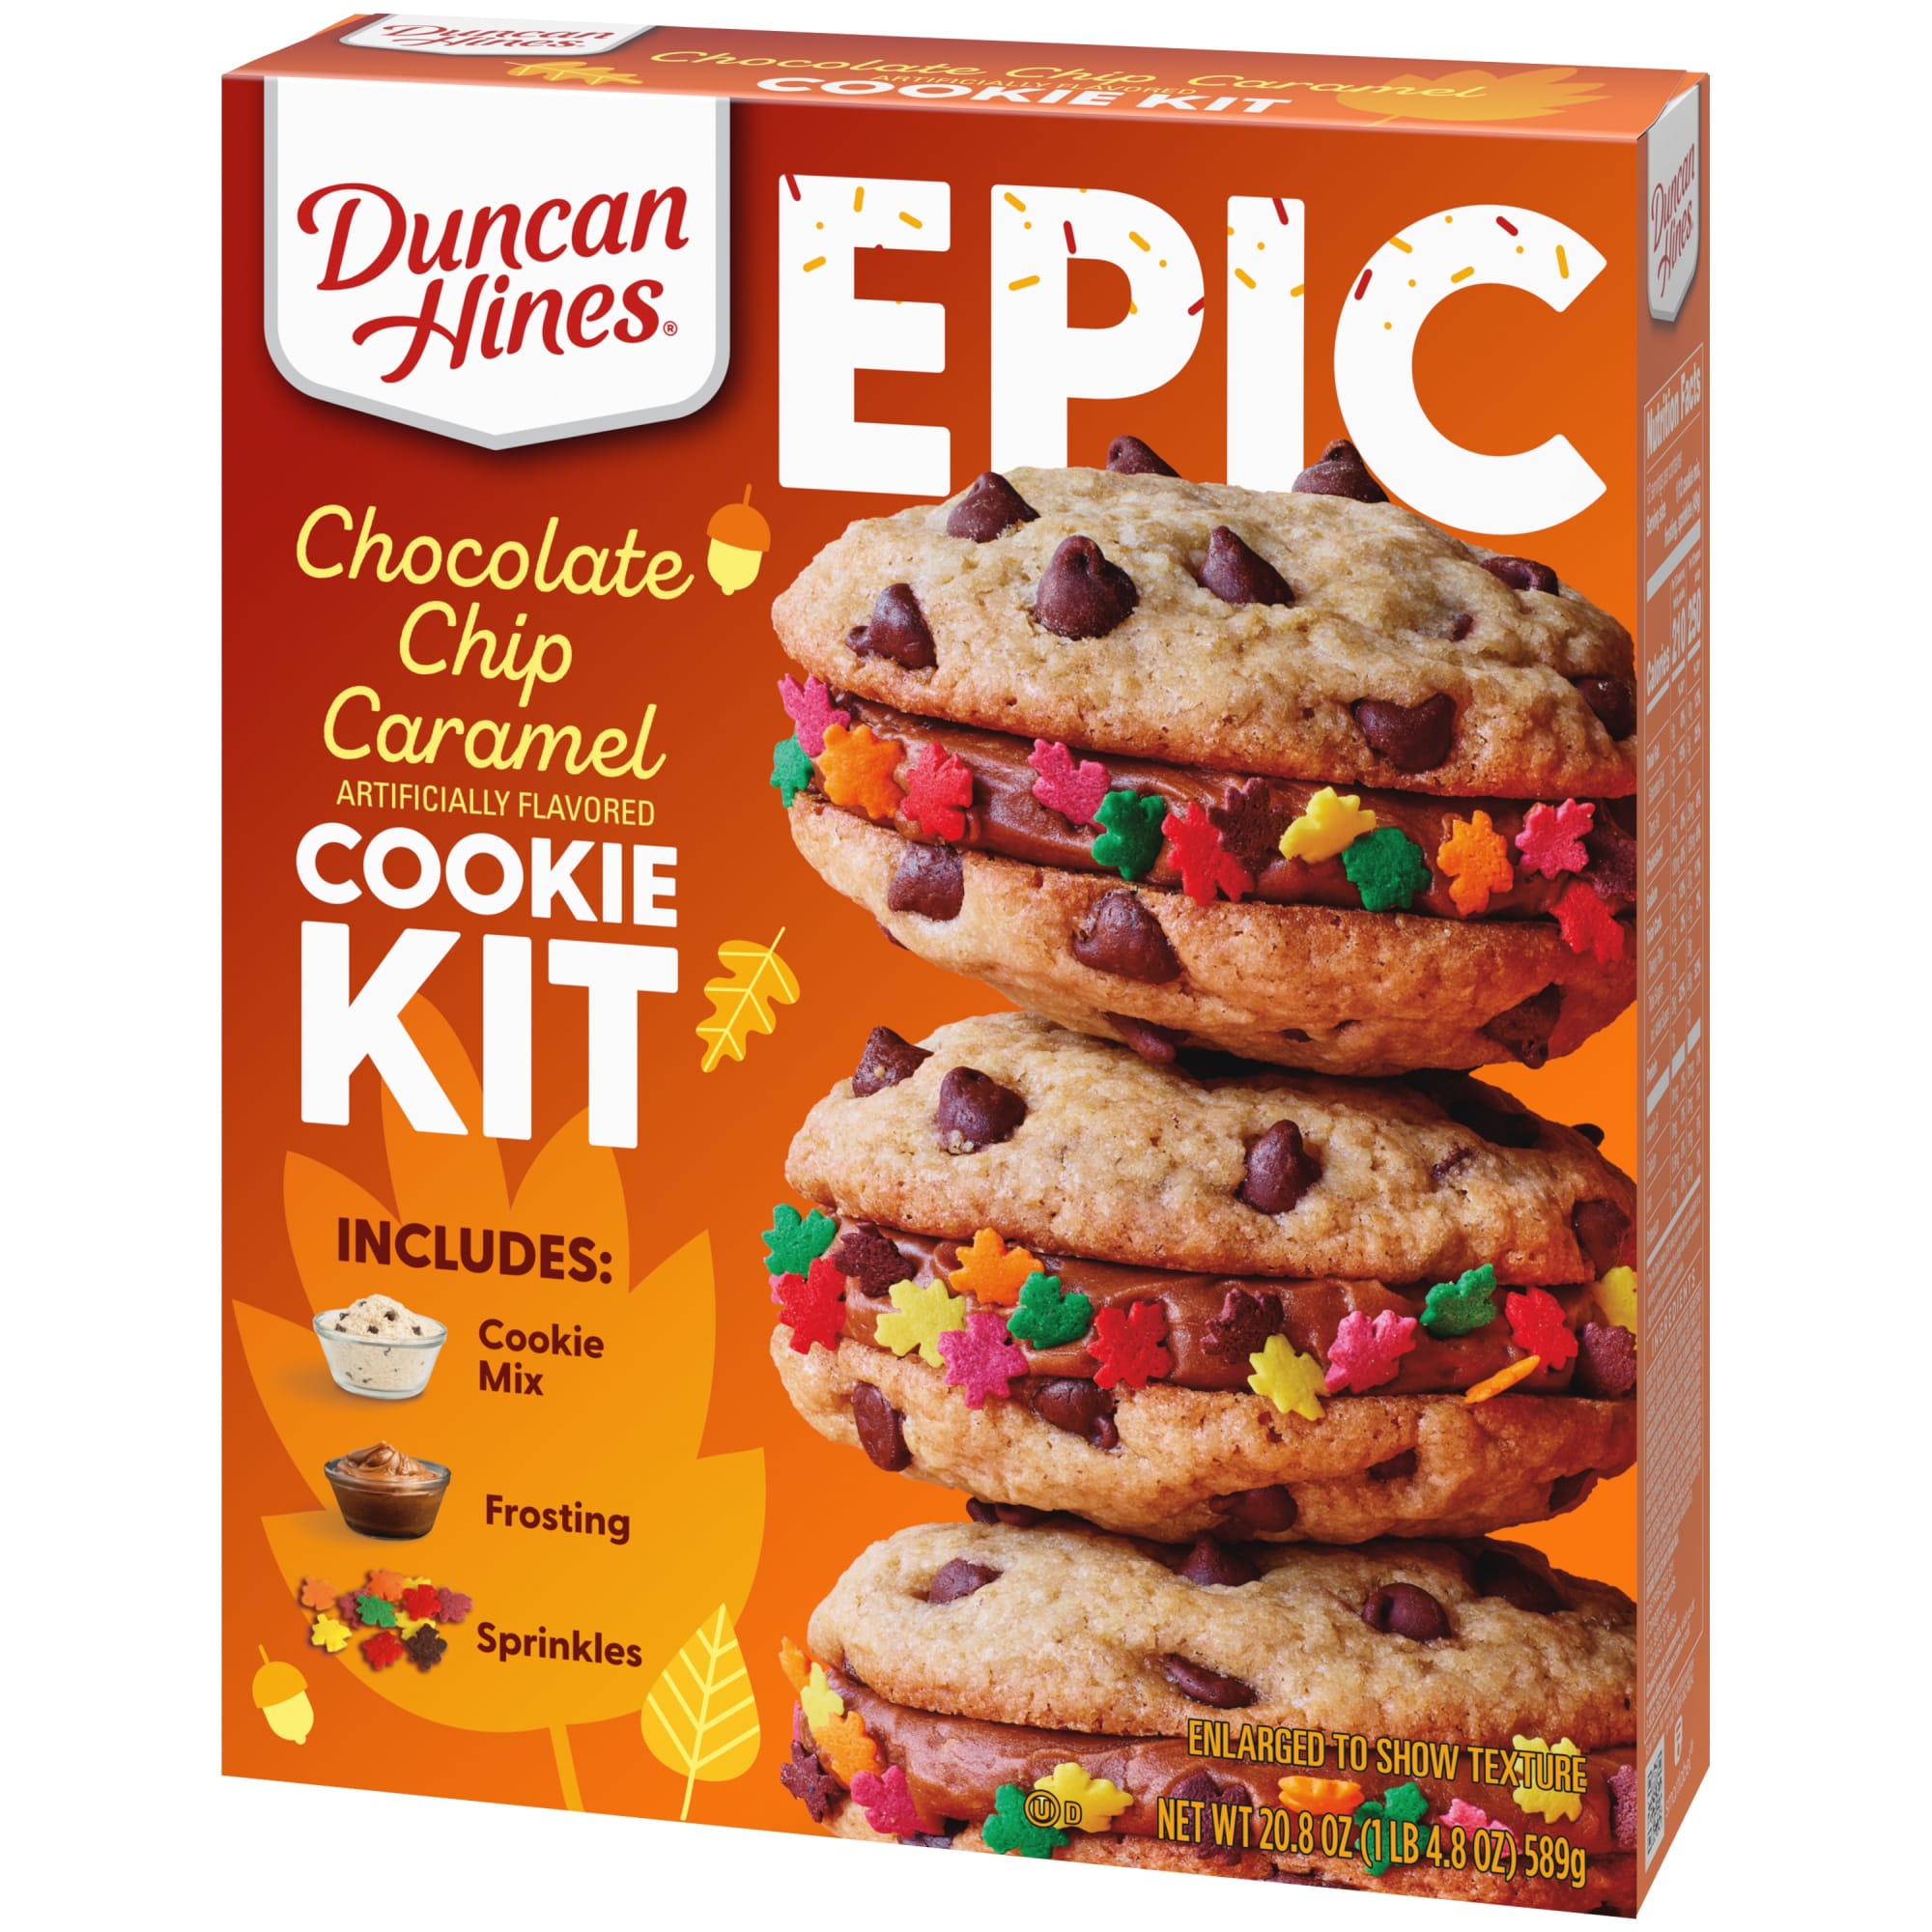 Duncan Hines EPIC chocolate chip caramel cookie kit 1